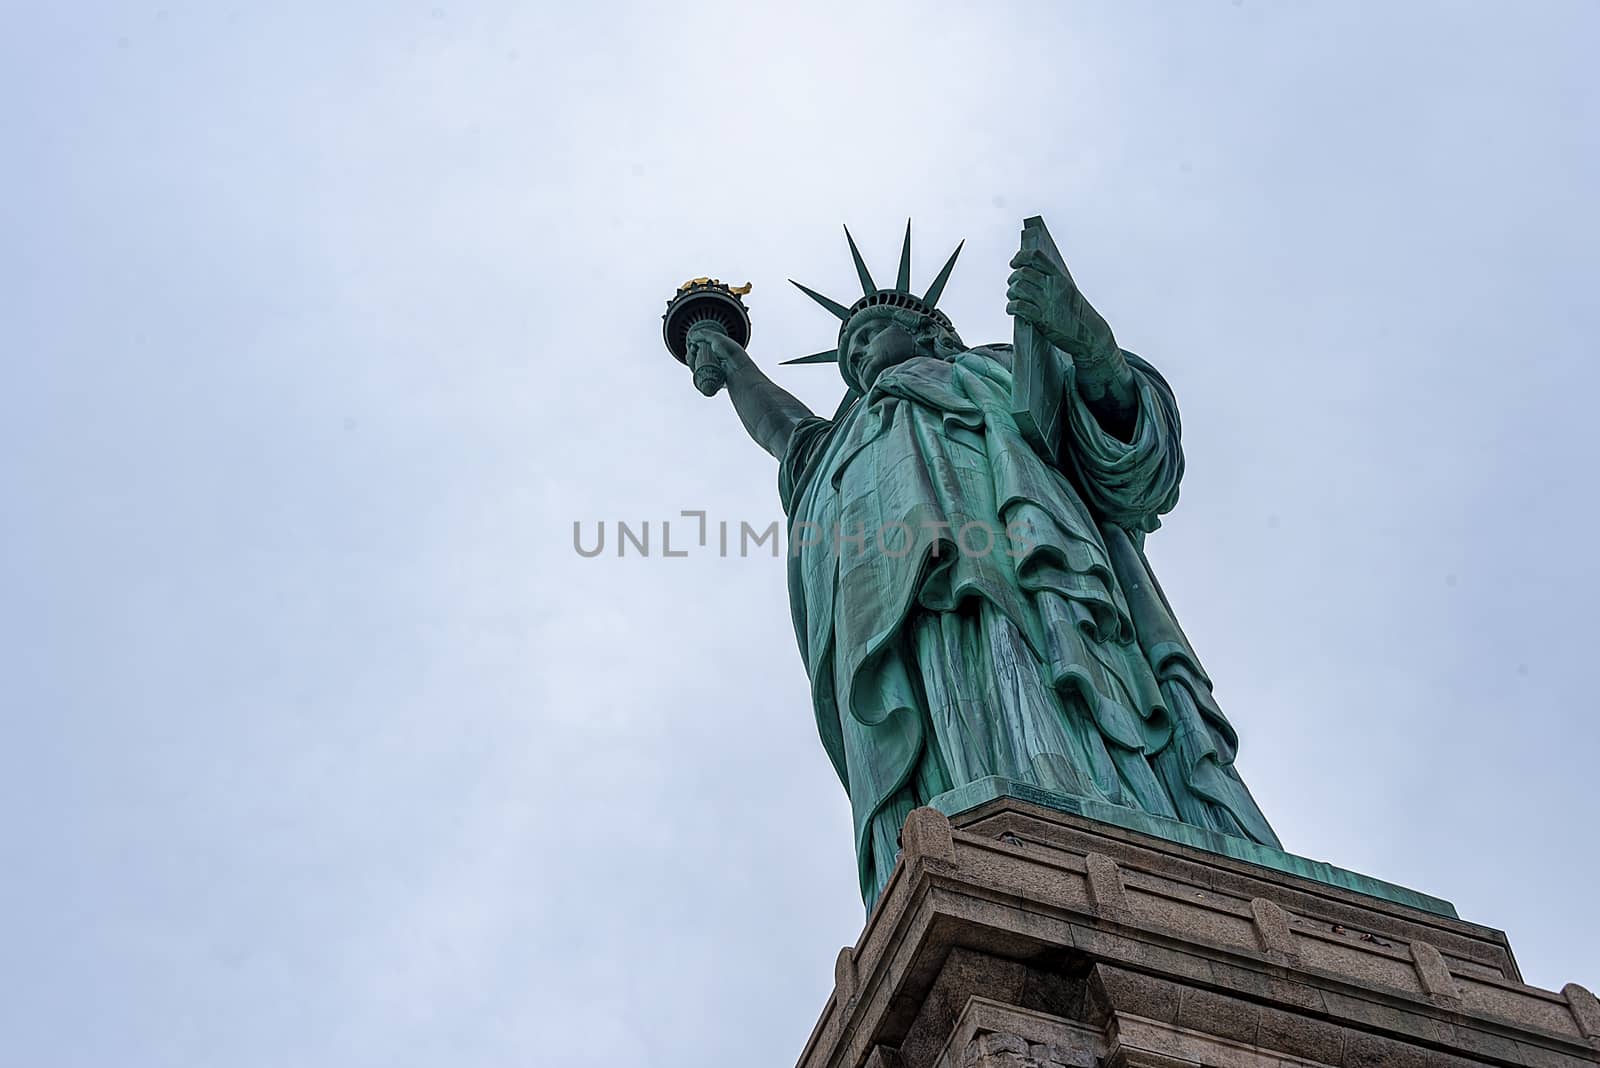 USA, New York - May 2019: Statue of Liberty, Liberty Island